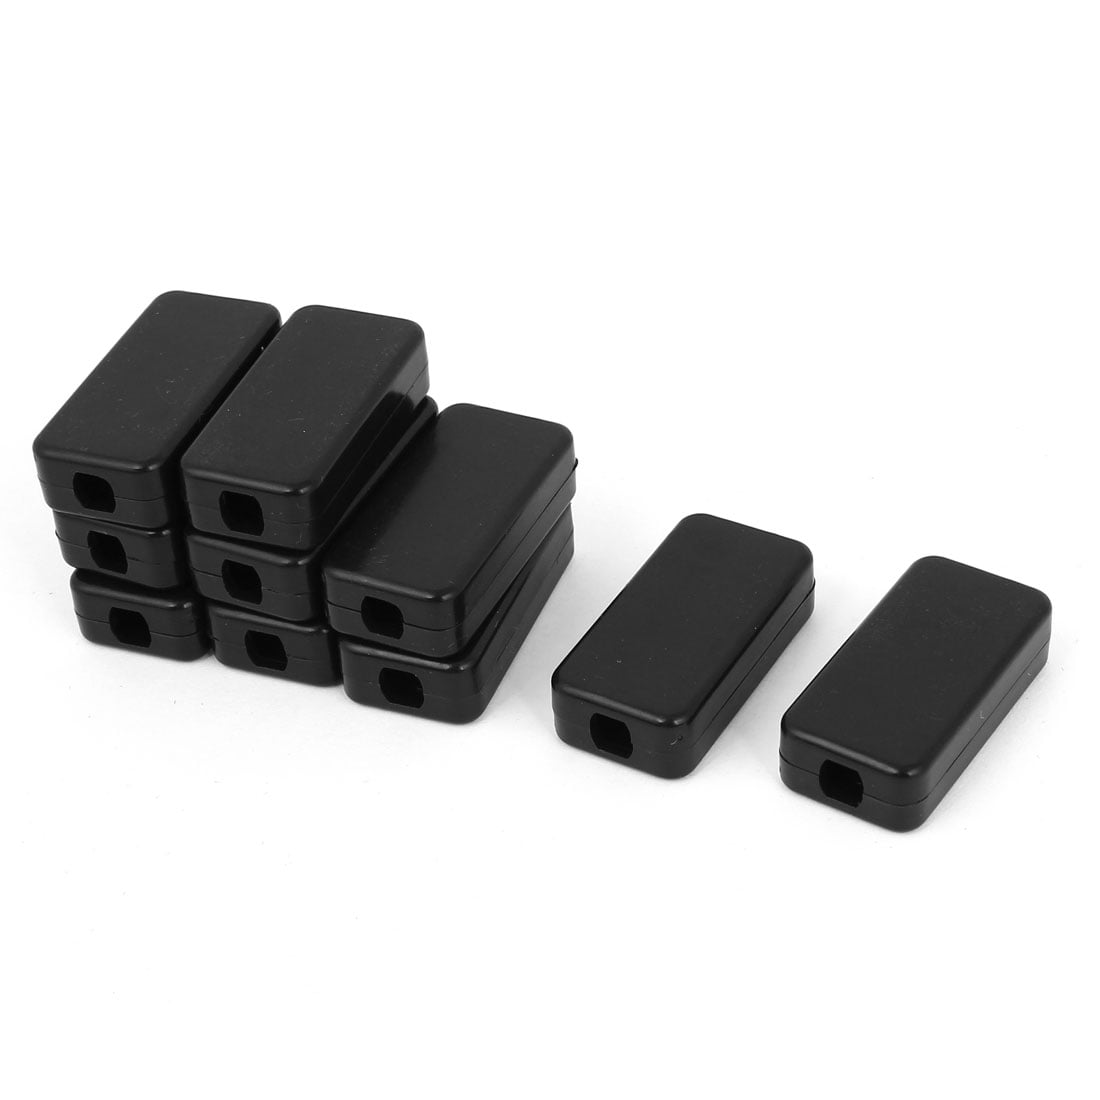 70mm x 45mm x 18mm Plastic Waterproof Electronic Junction Box Project Case PVC 